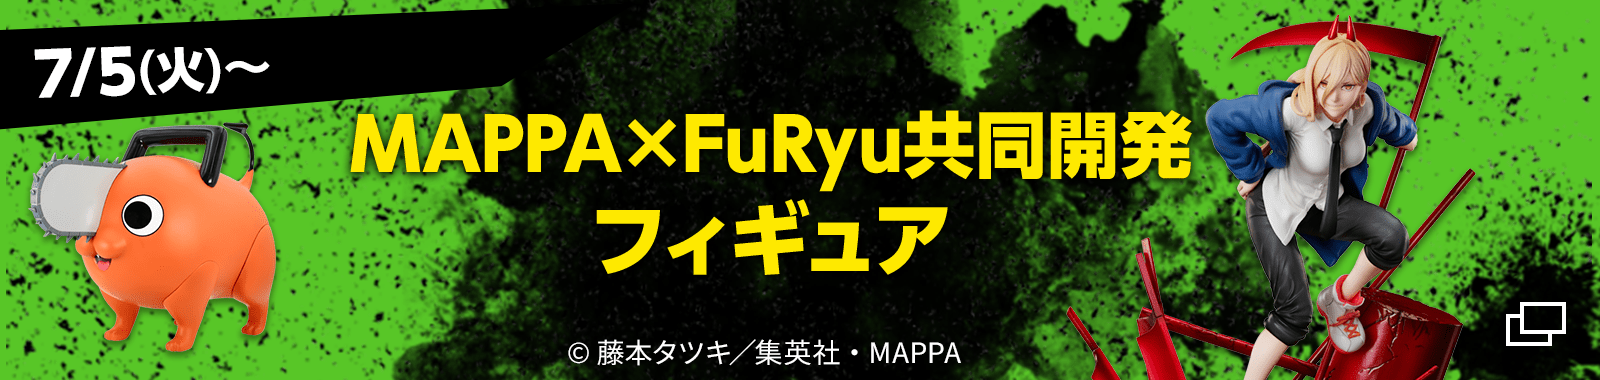 MAPPA×FuRyu共同開発フィギュア